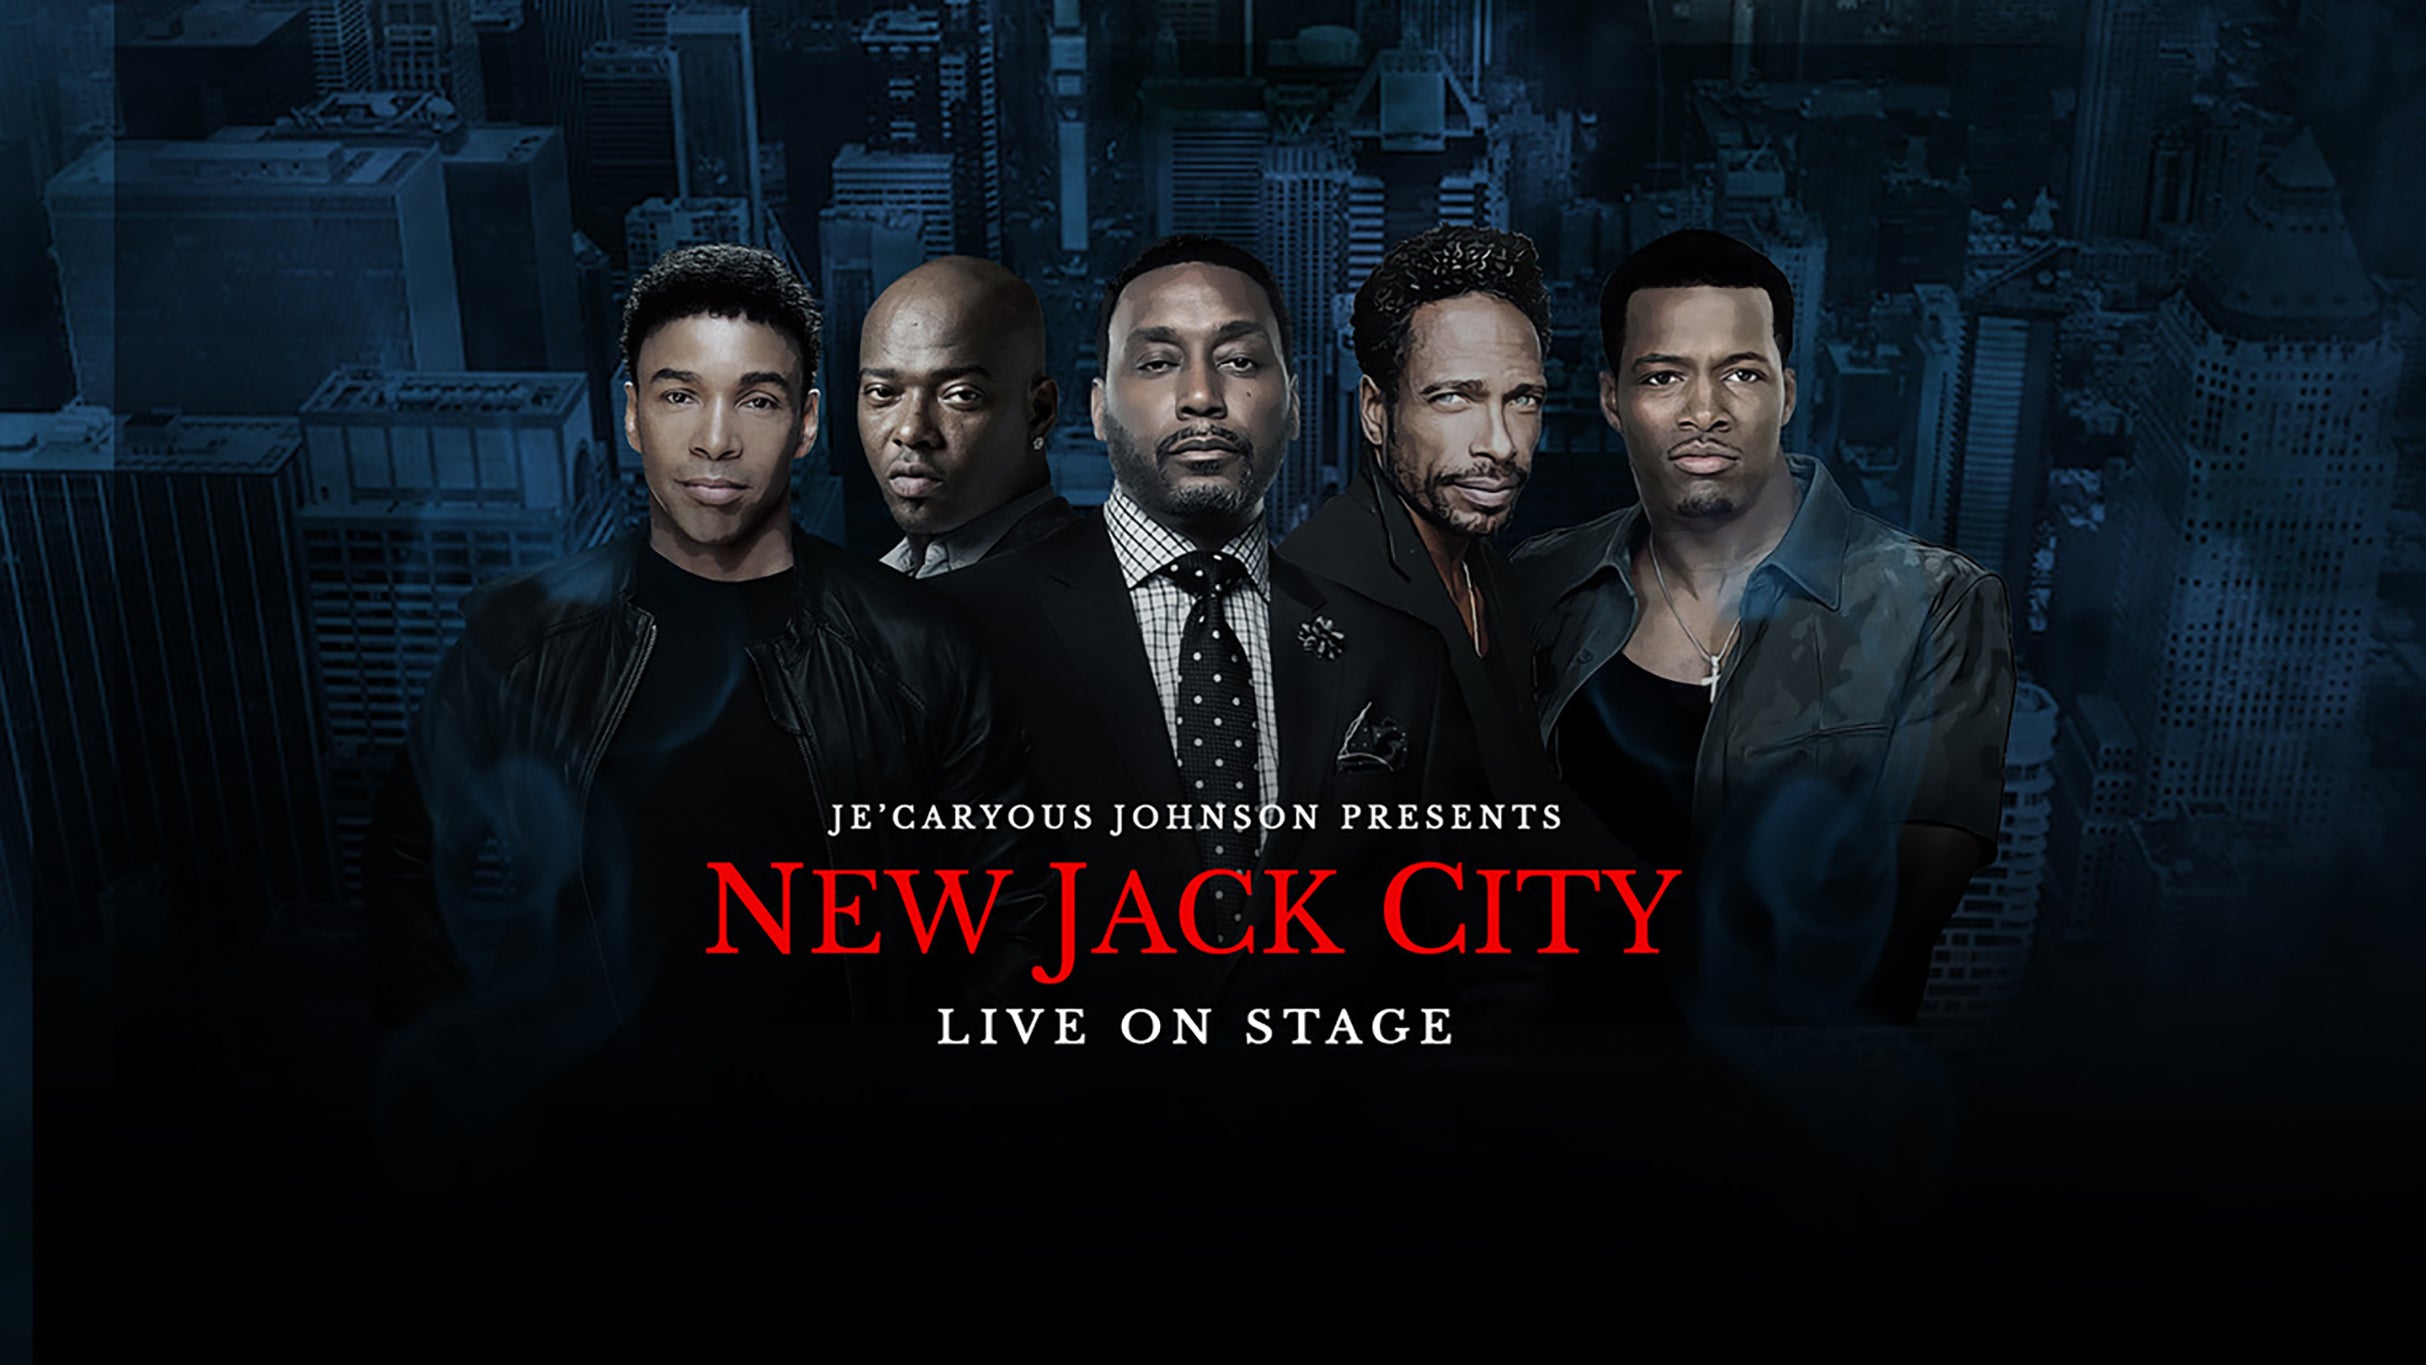 Je'Caryous Johnson Presents “NEW JACK CITY” at Chrysler Hall